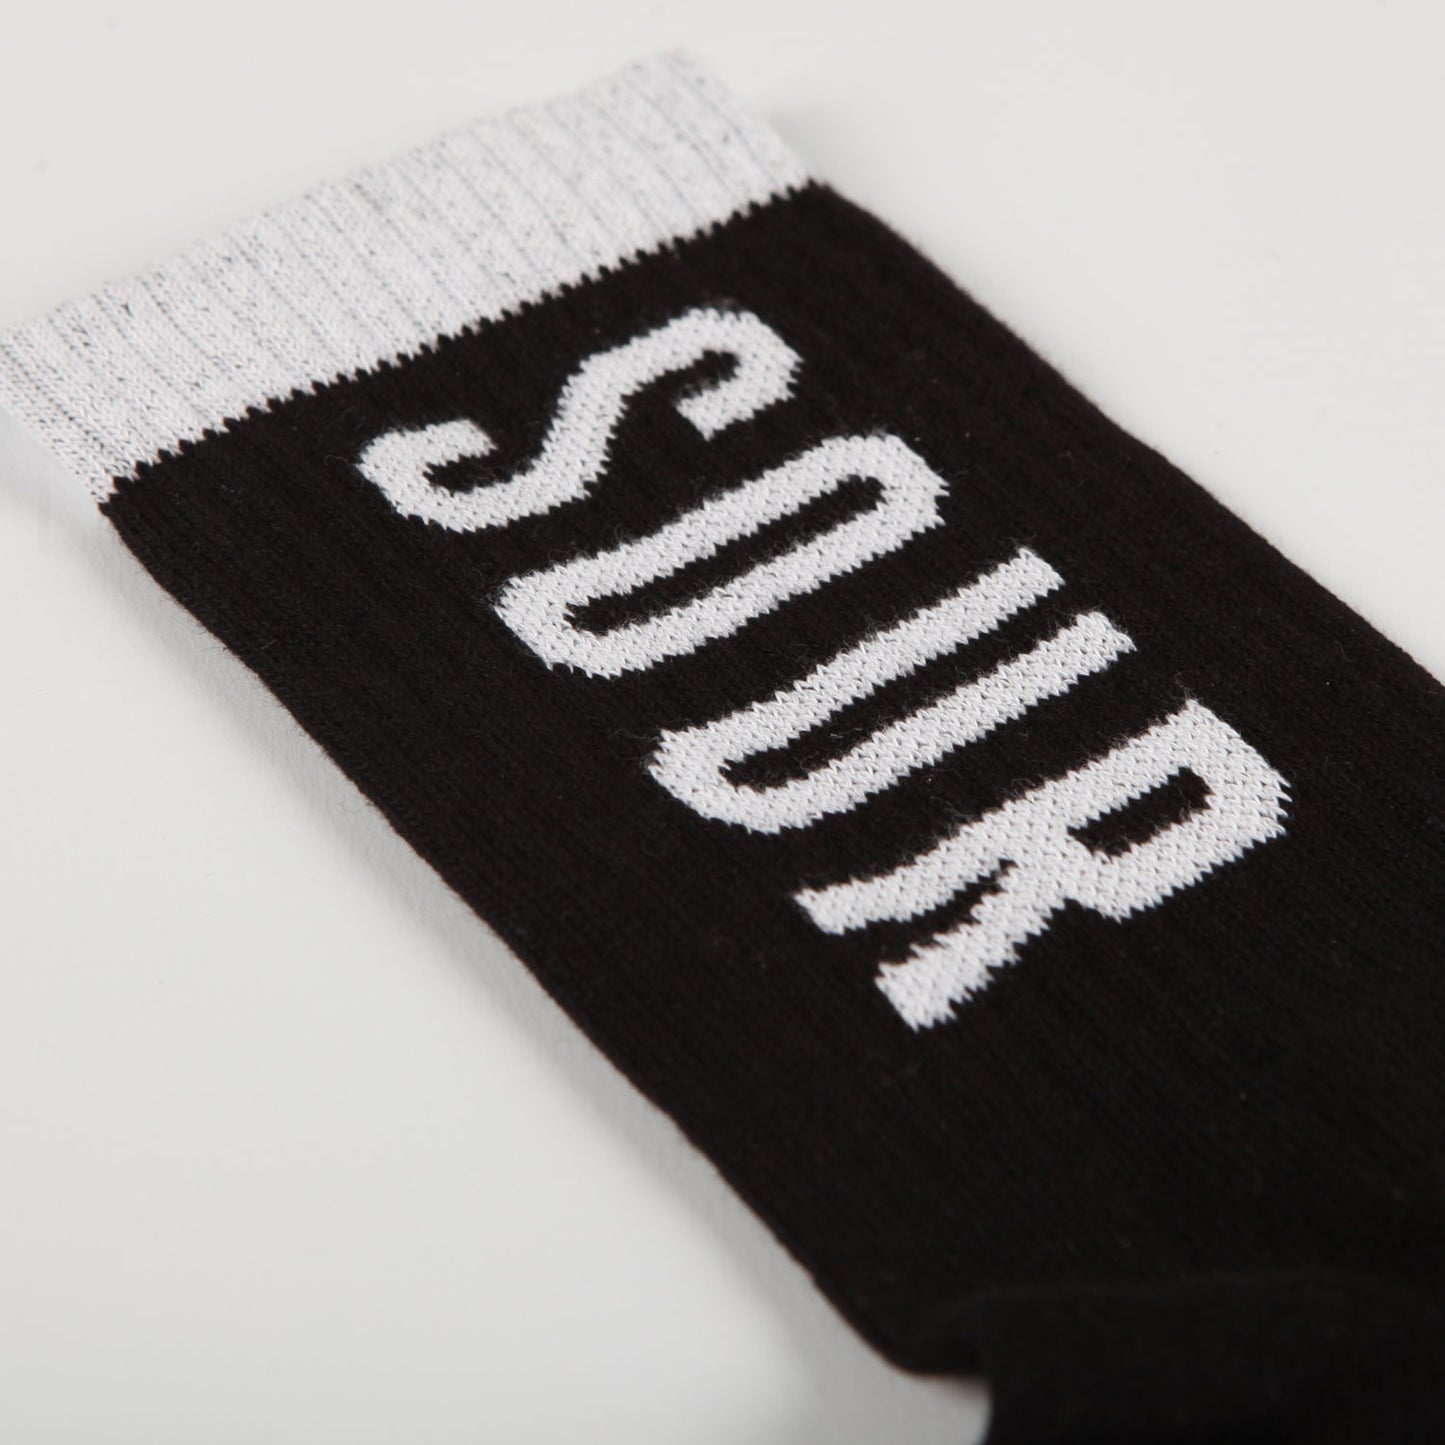 Sour Solution 'Sour' Socks (Black)